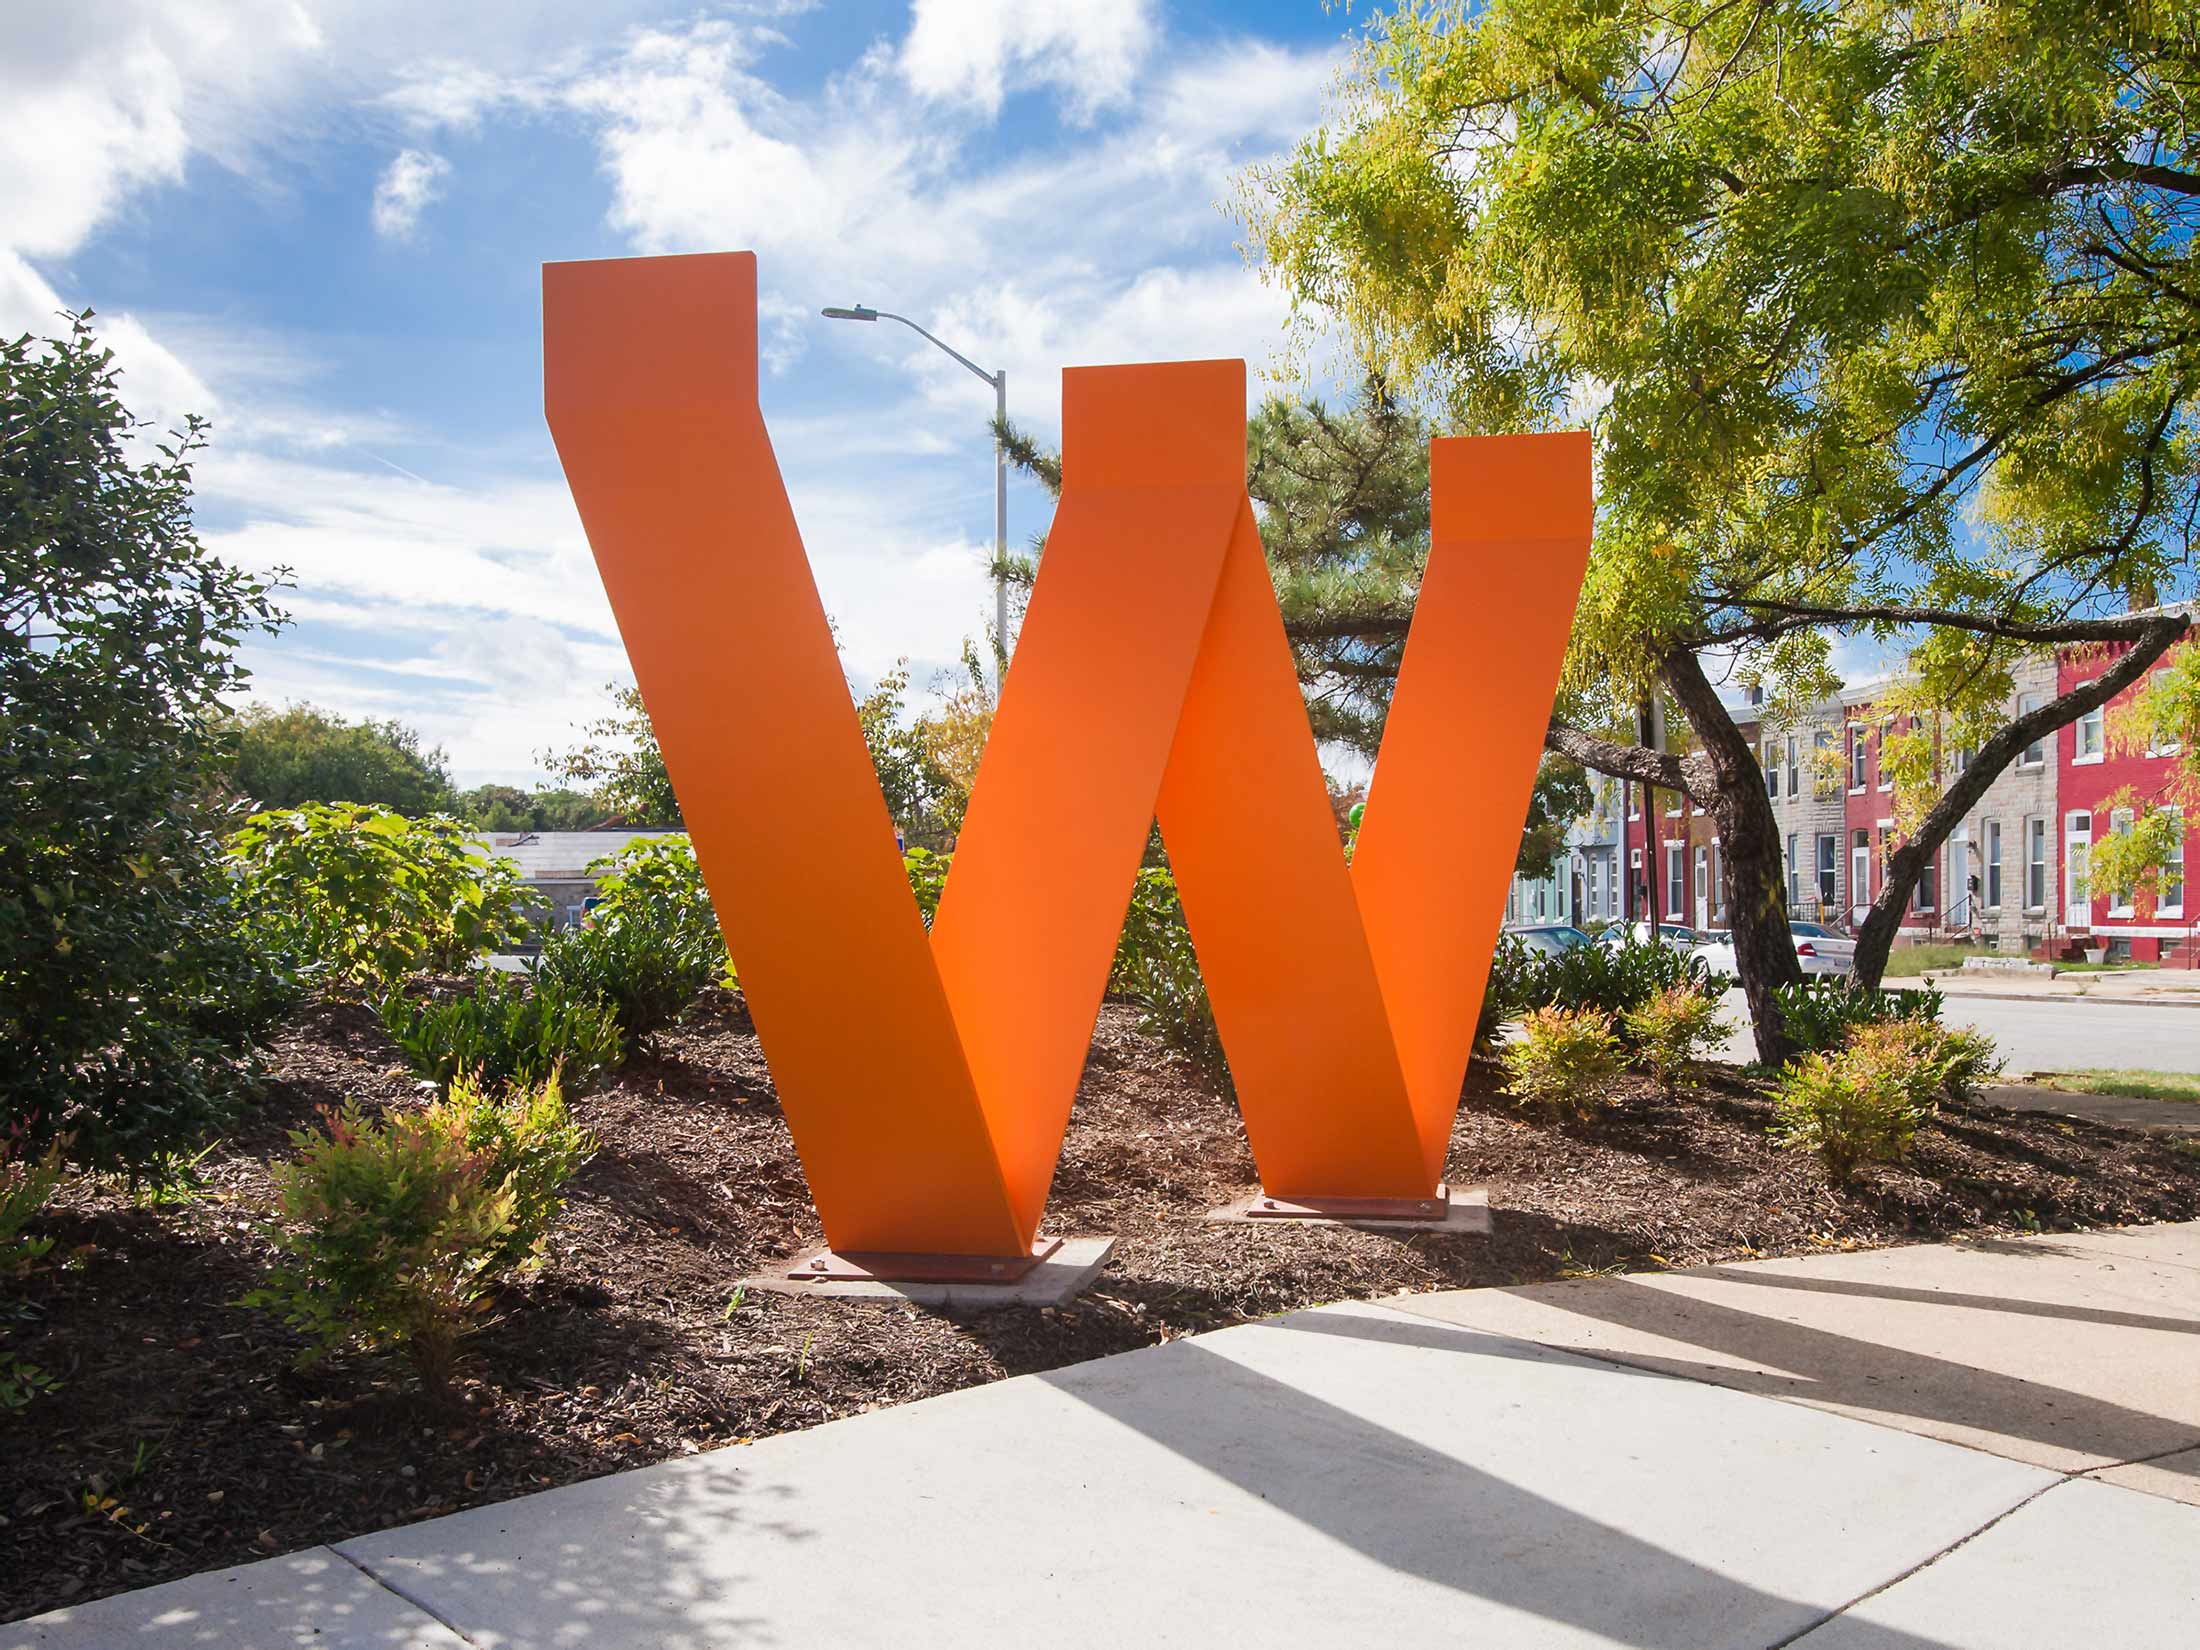 Waverly W large sculptural alphabet letter neighborhood gateway signage in Baltimore's Waverly neighborhood